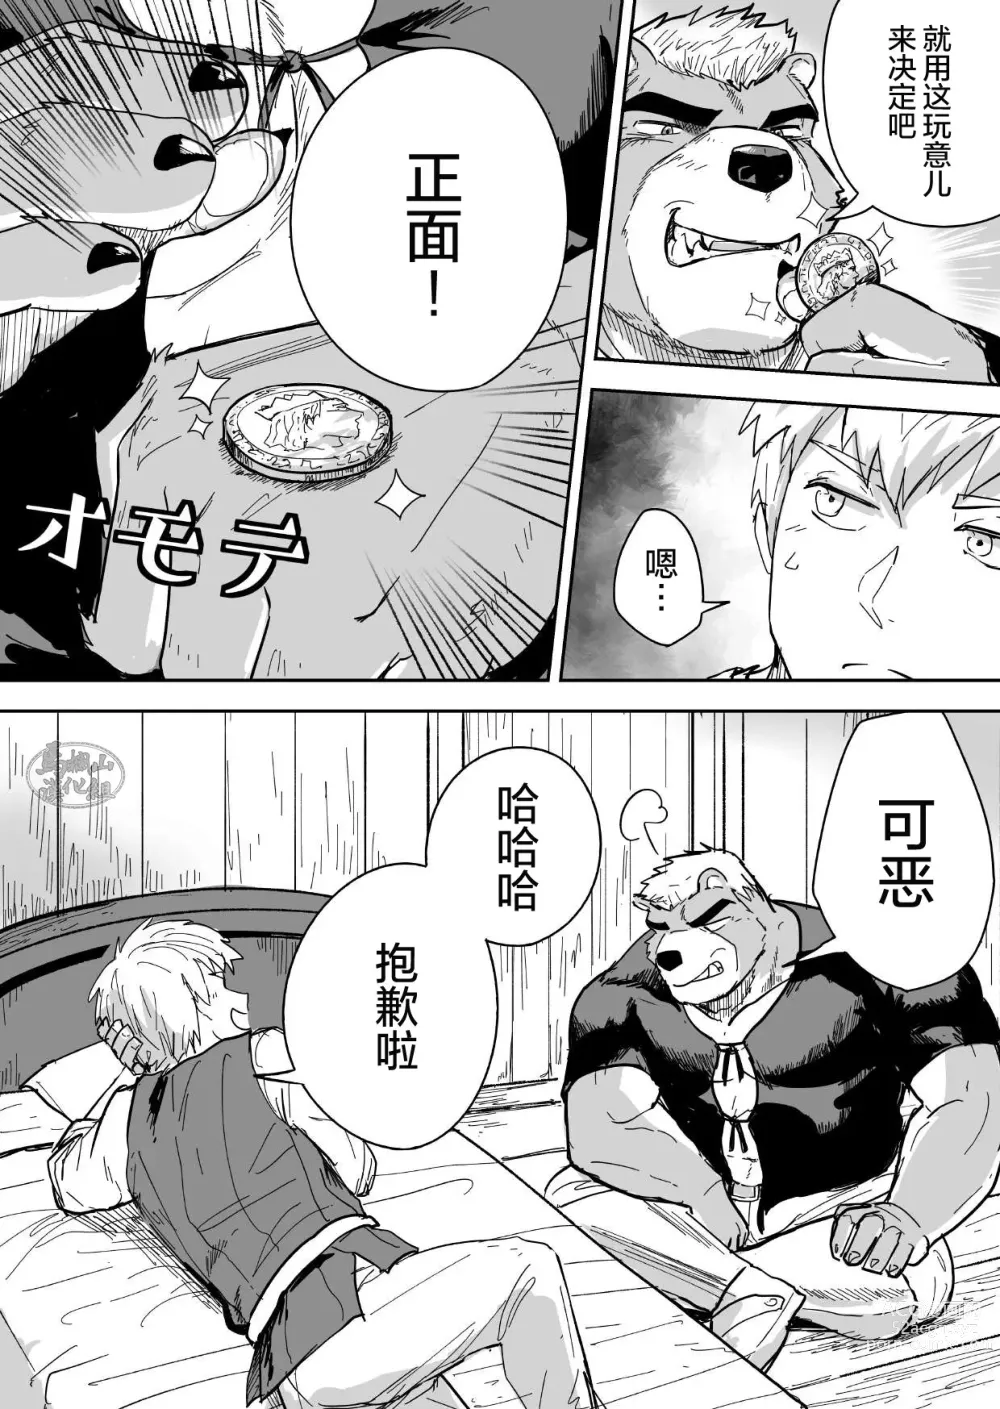 Page 5 of doujinshi Aibou Gachimuchi Kemonohito Senshi to Aibou Ijou ni Naru Hanashi｜ 当伙伴是强壮兽人战士之后和他超越友谊的故事